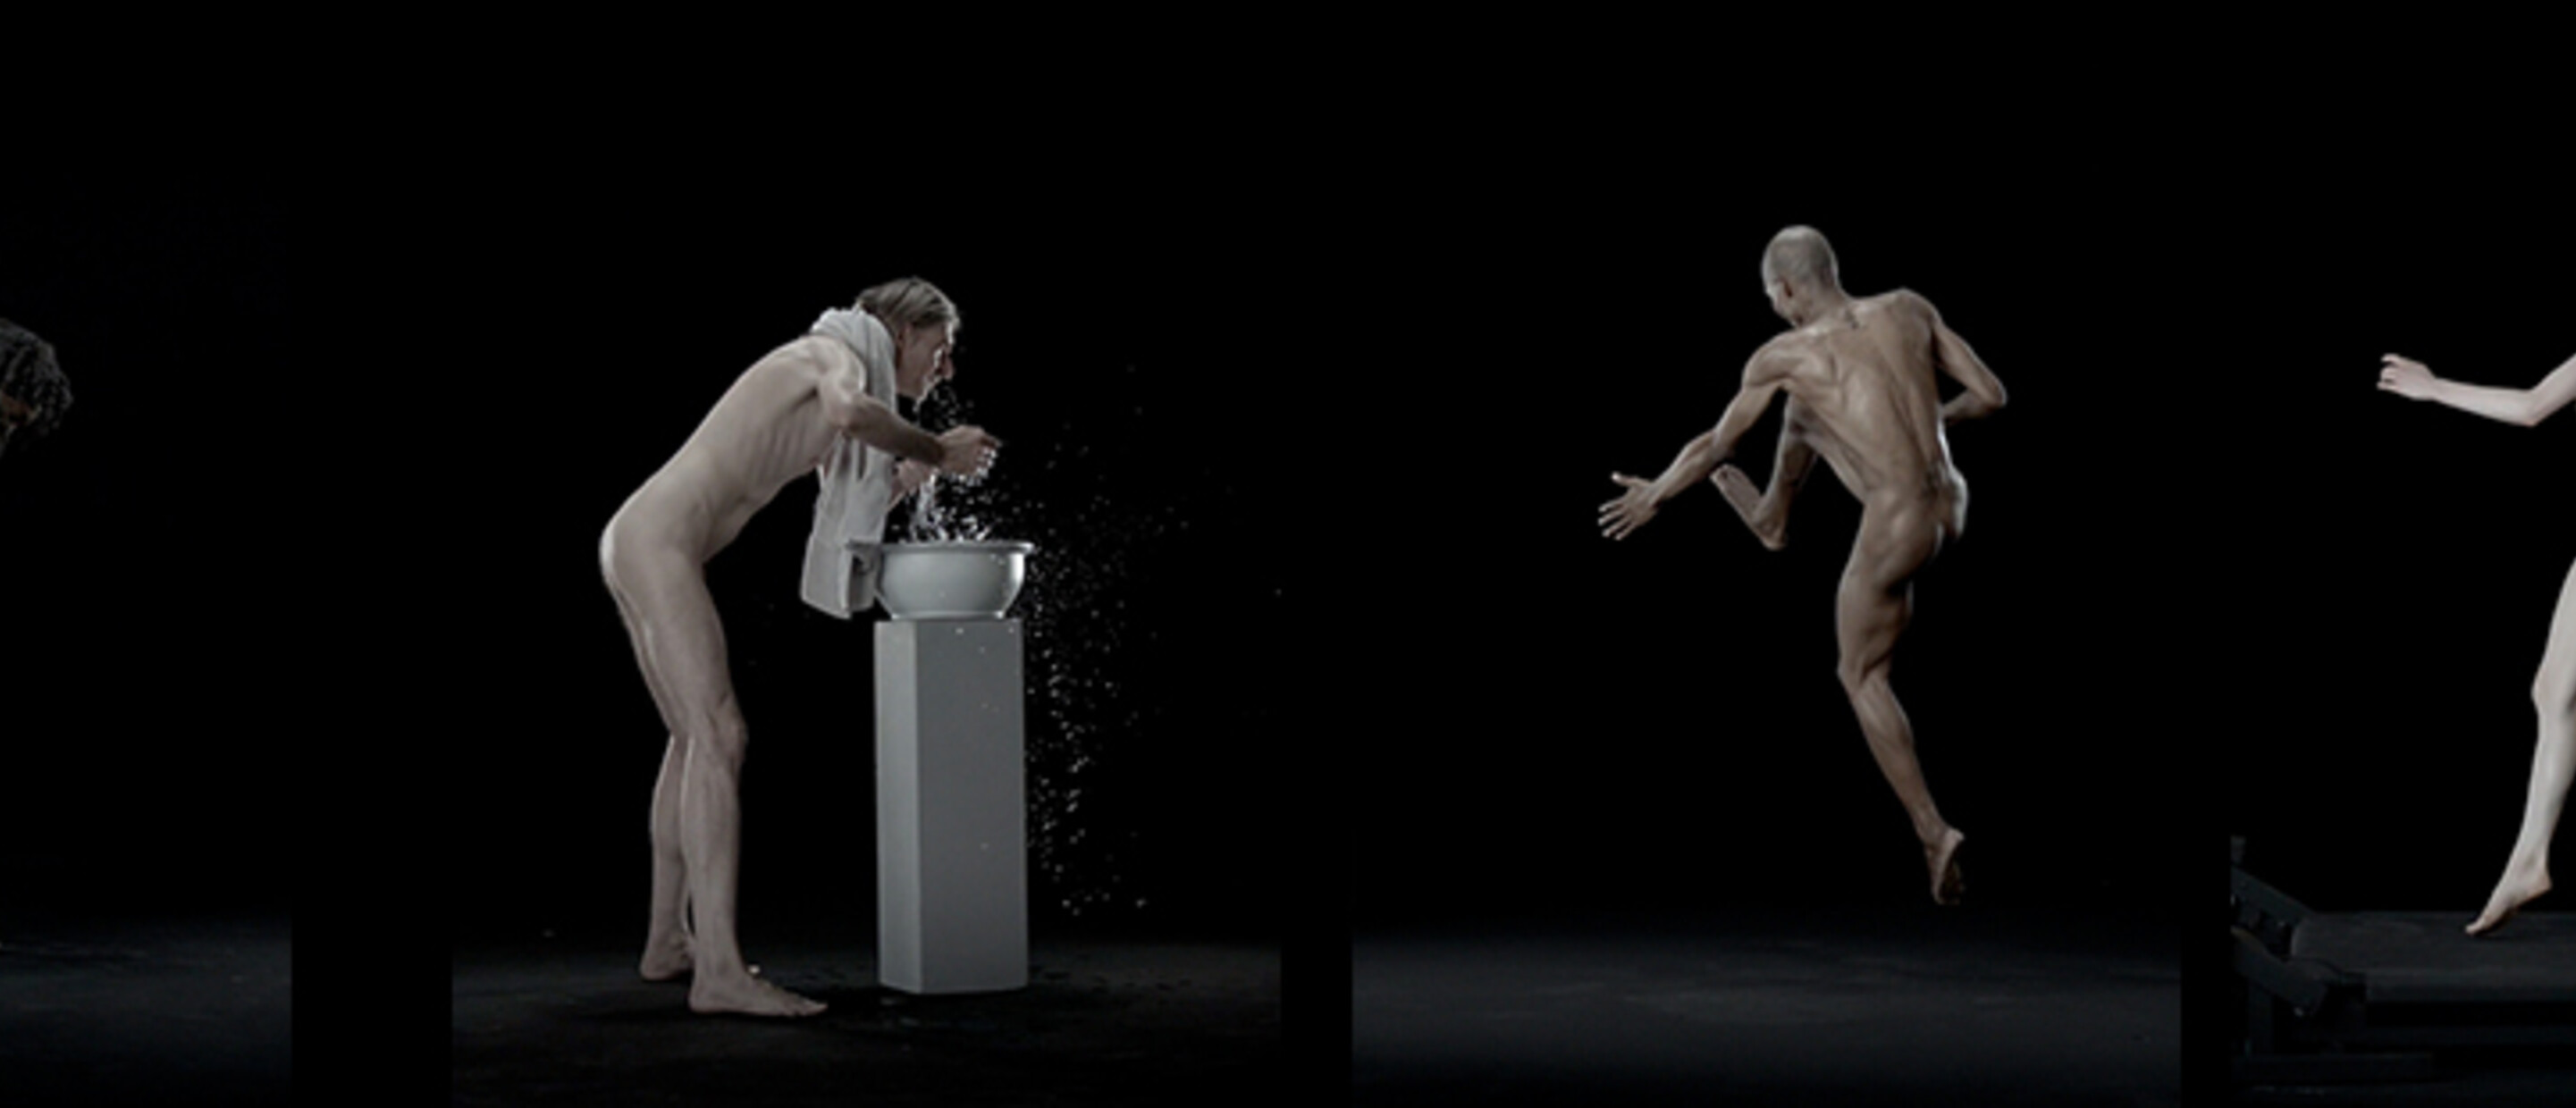 David Michalek, still from Figure Studies, 2012, high-speed HD video, Courtesy of the artist